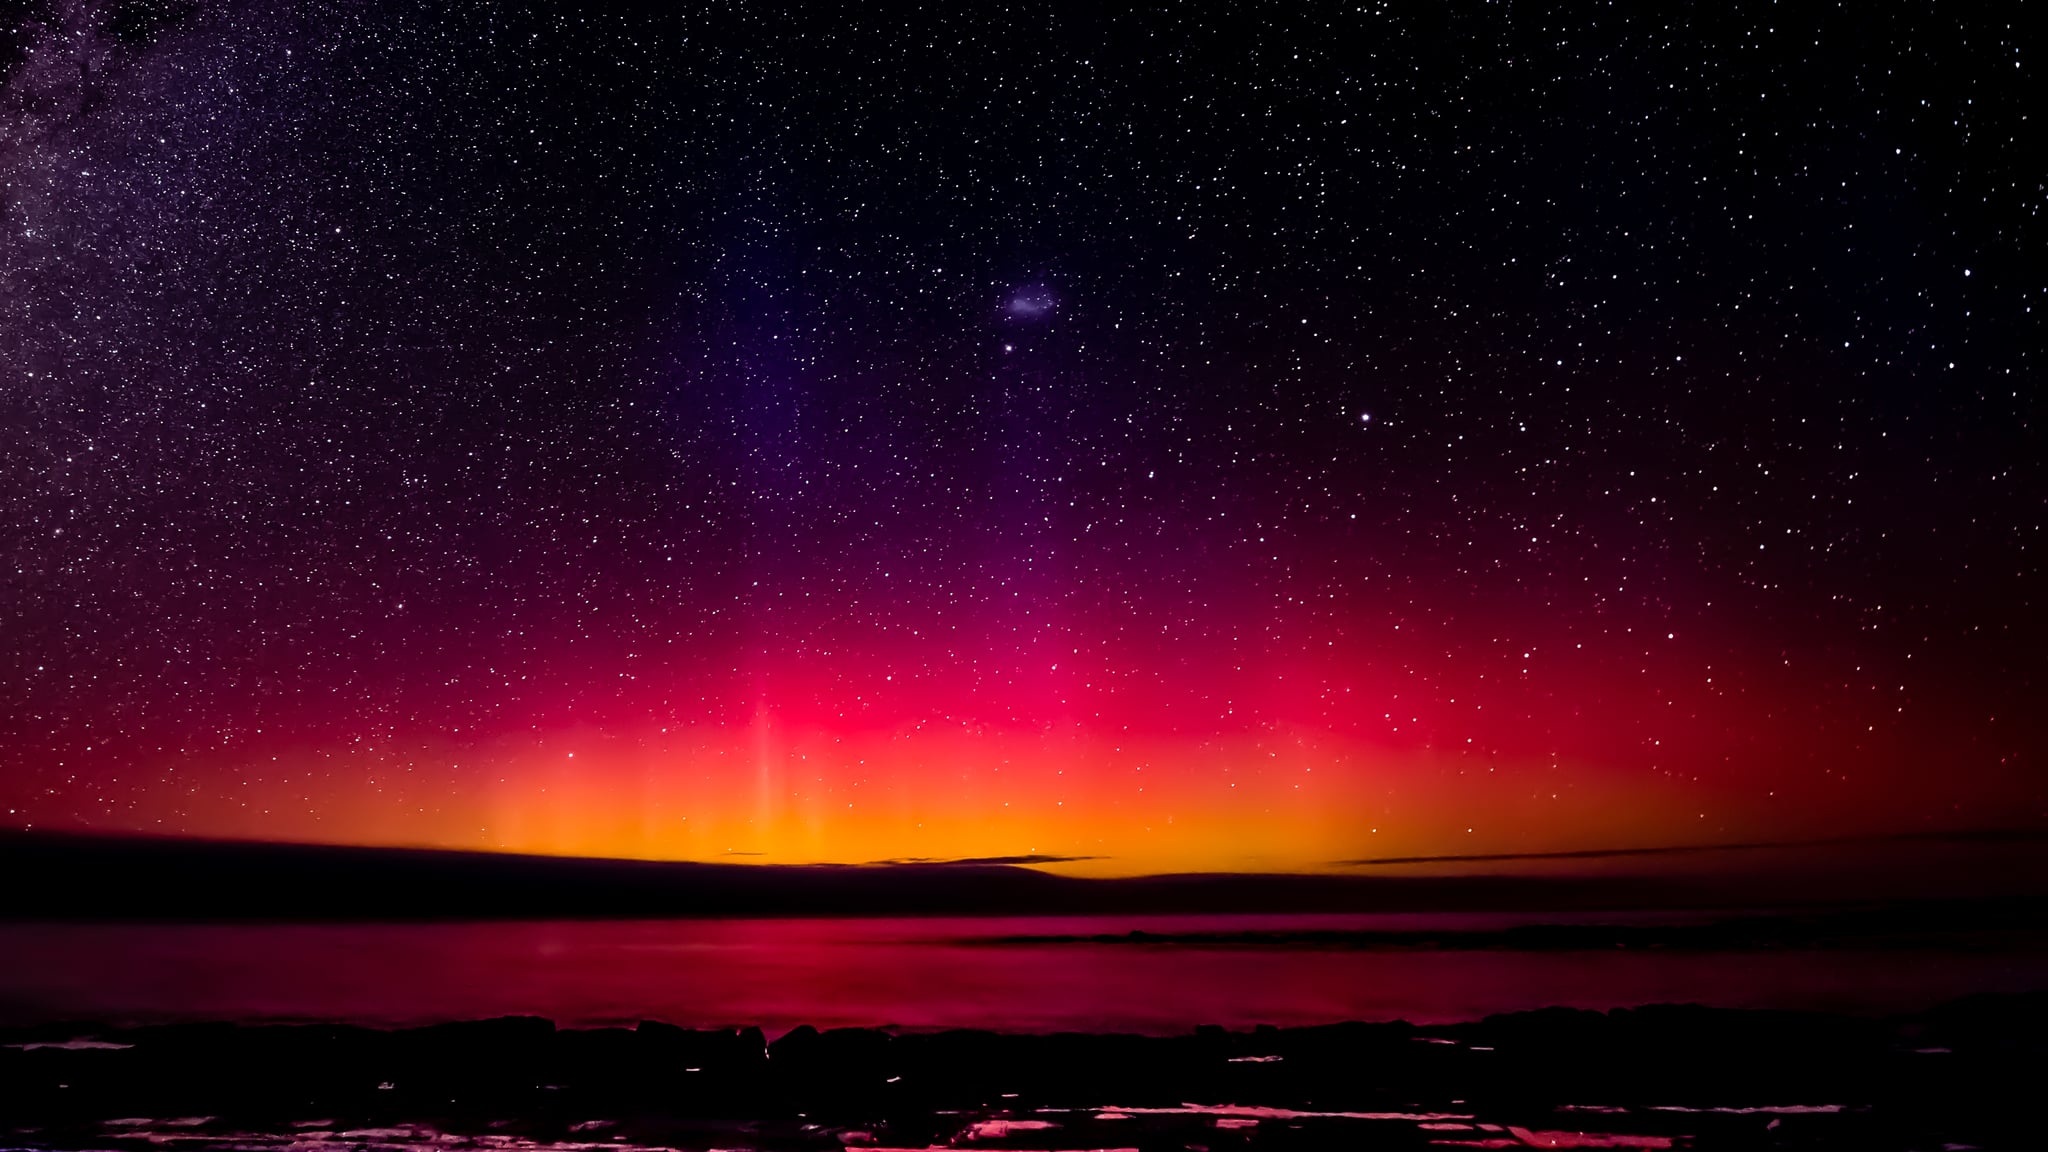 Aurora Australis (Apollo Bay, Australia) Astronomy Photographer of the Year Entries That Will Leave You Breathless